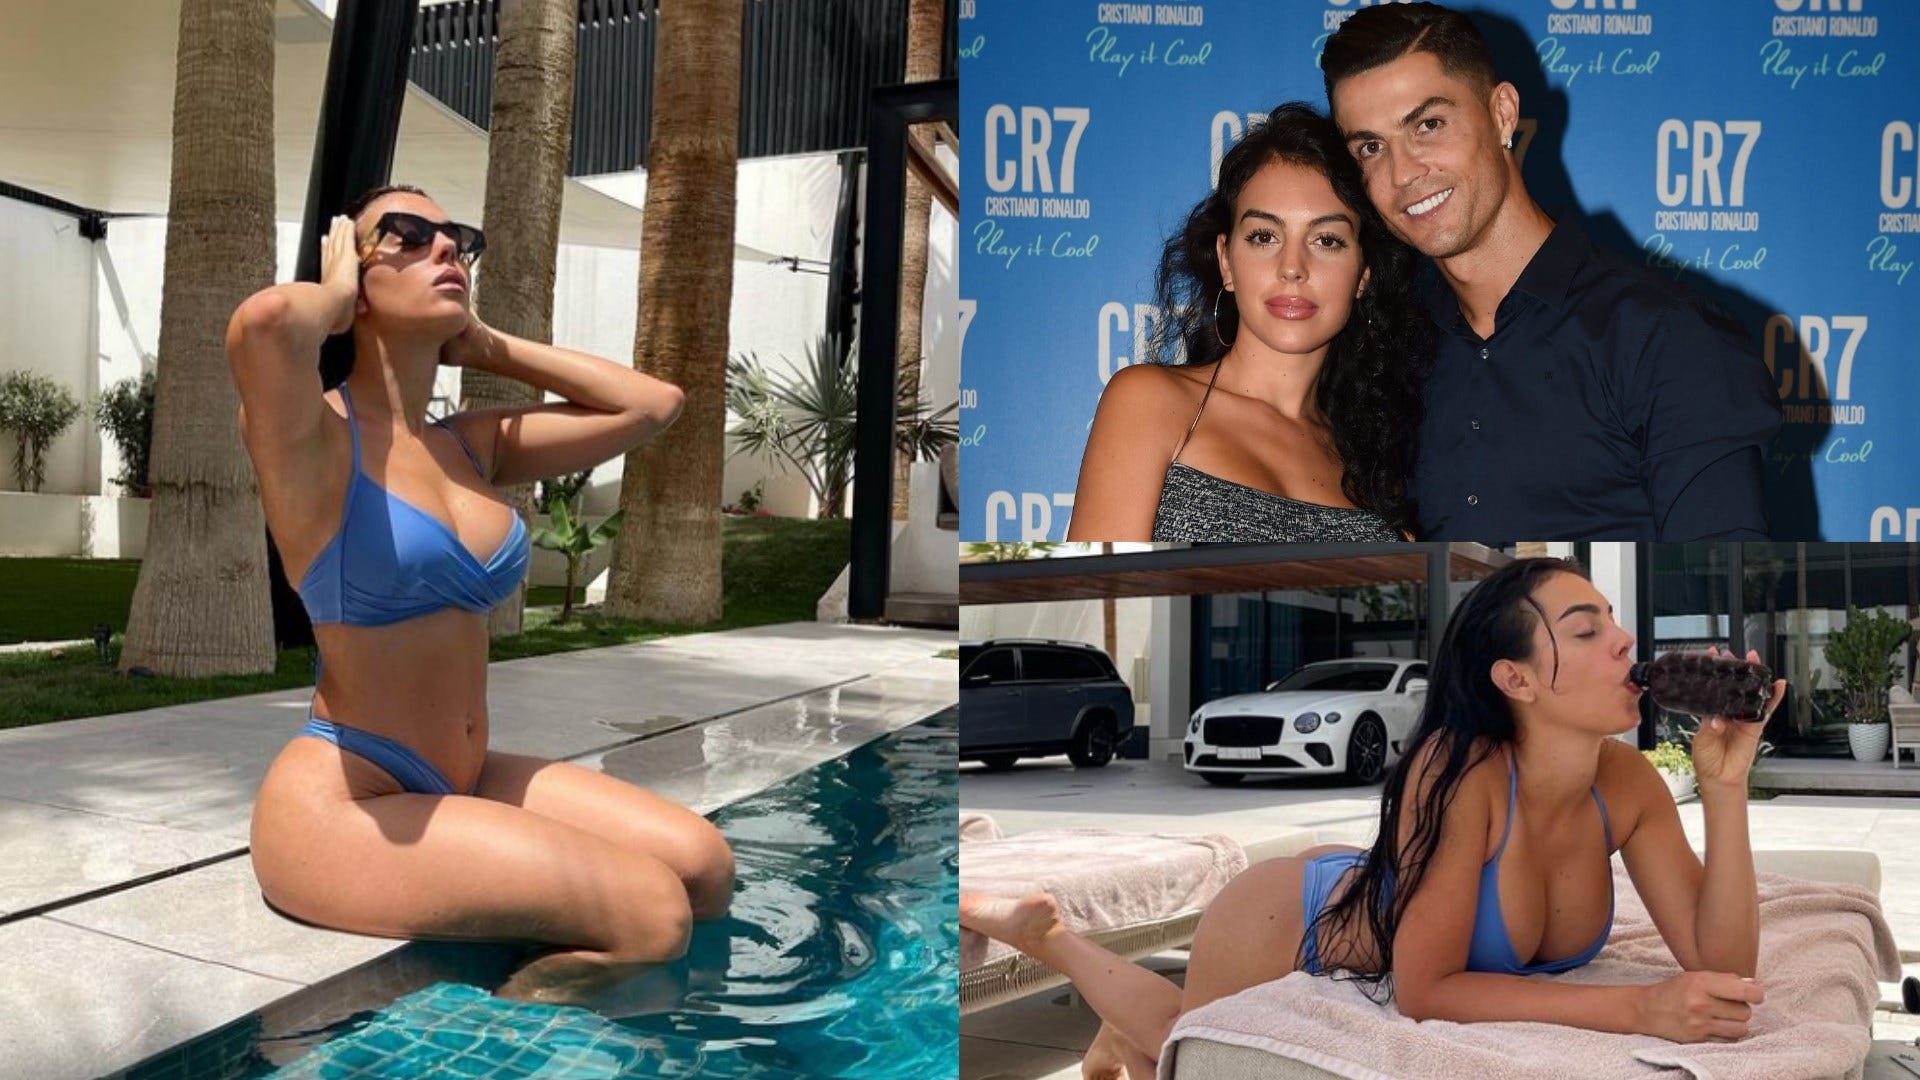 Cristiano Ronaldos girlfriend Georgina Rodriguez posts racy bikini pictures on Instagram as she risks breaking strict Saudi Arabian law Goal India